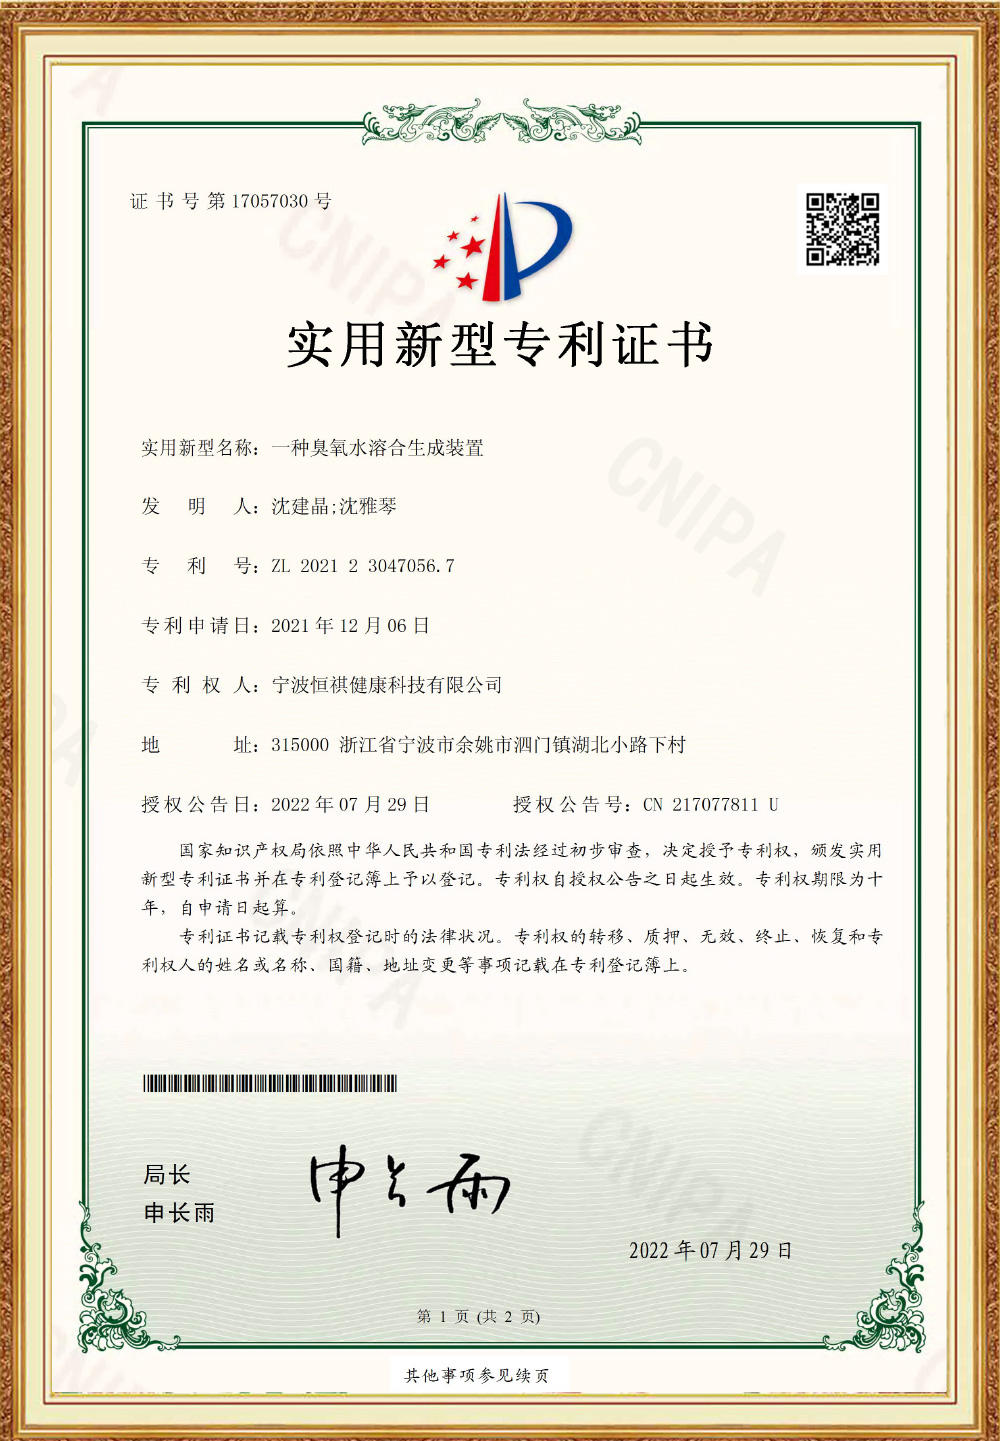 Ningbo Hengqi Health Technology Co, Ltd.